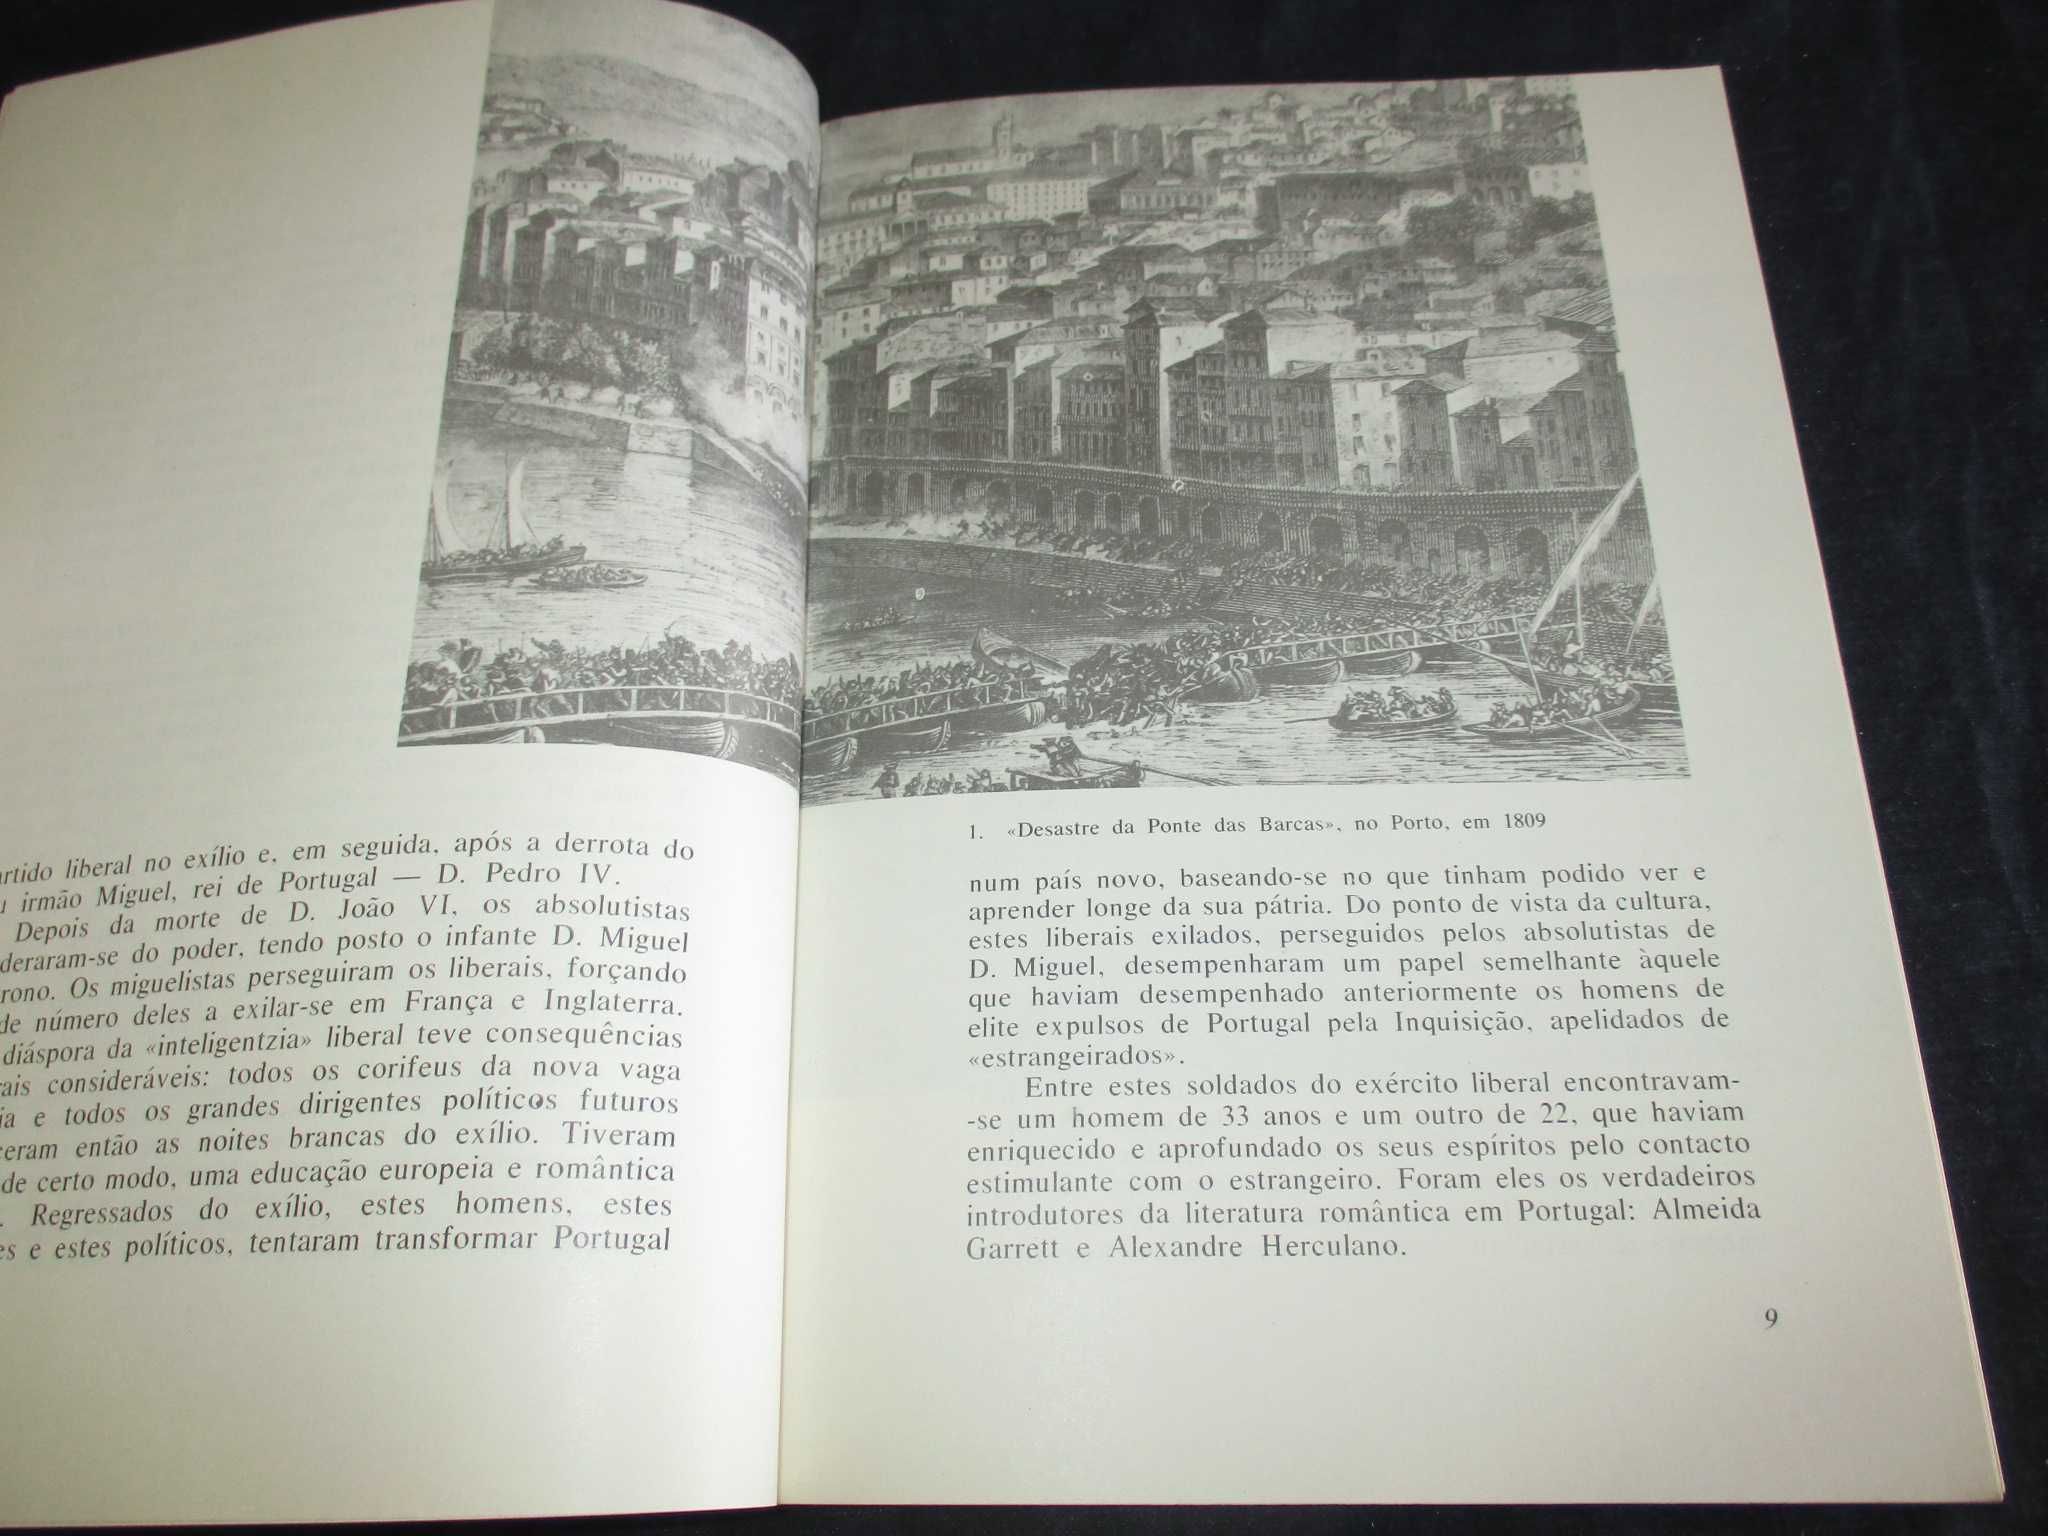 Livro Breve Panorama da Literatura Portuguesa